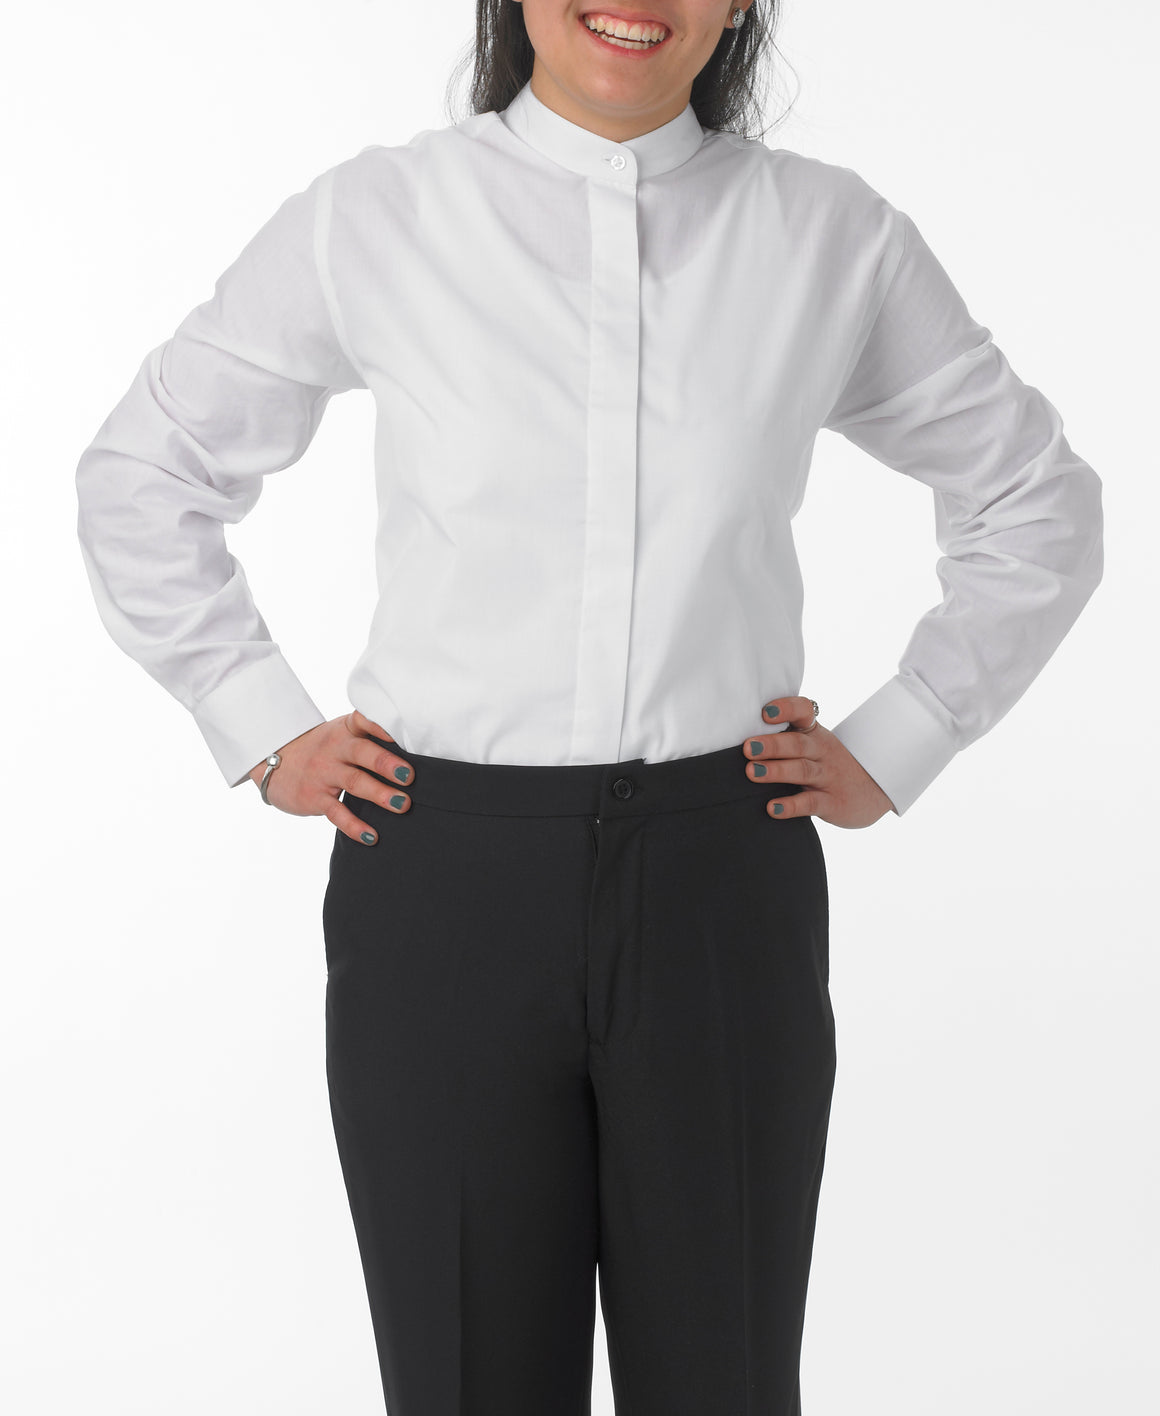 Women's White, Banded Collar, Long Sleeve Dress Shirt